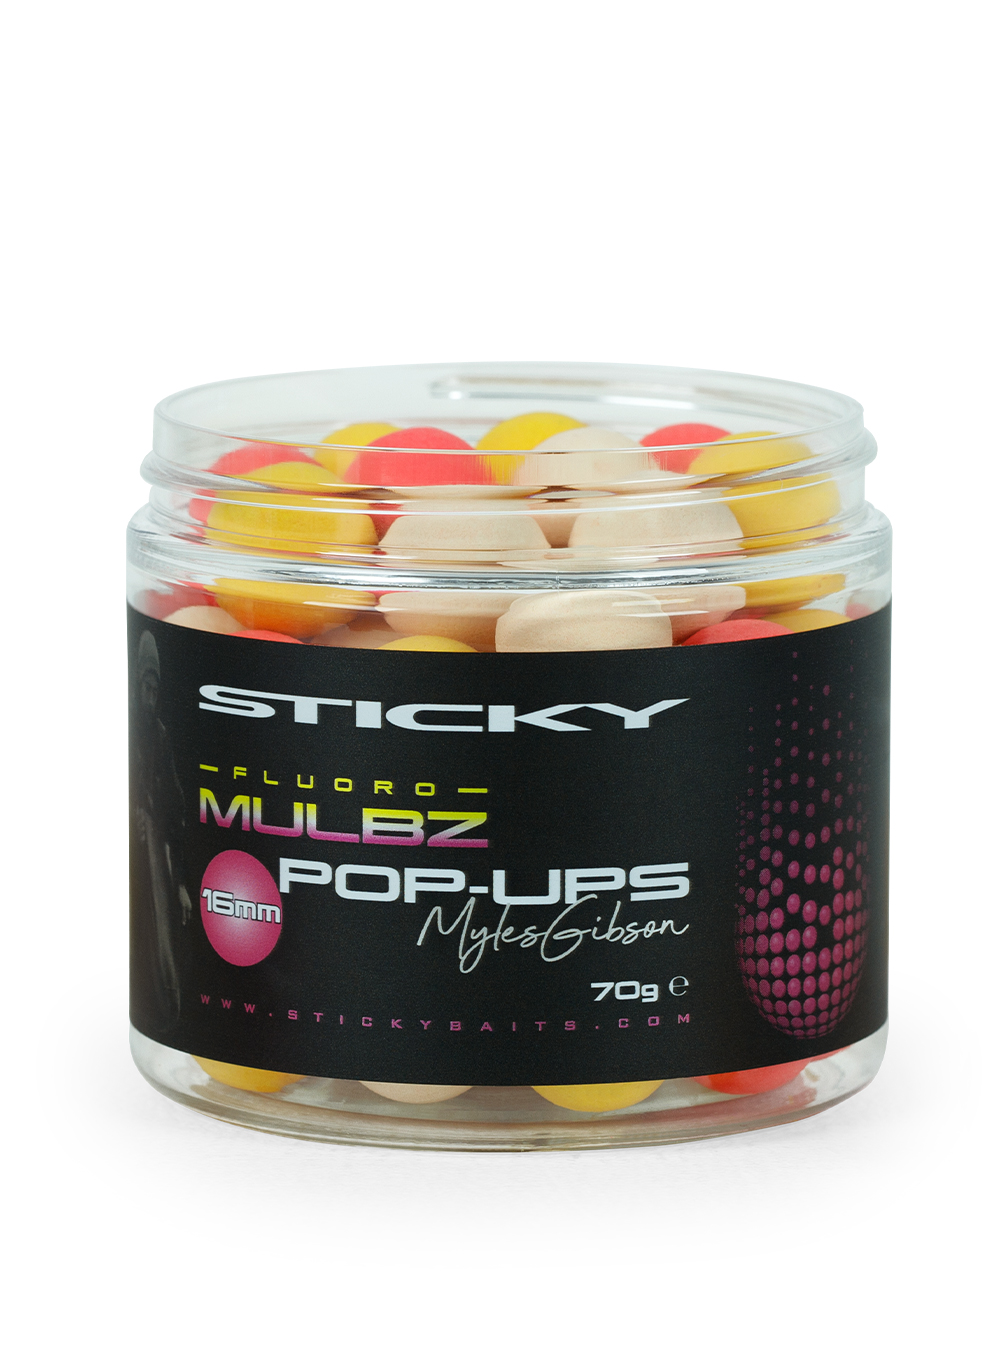 Sticky Baits Mulbz Fluoro Mixed Pop Ups